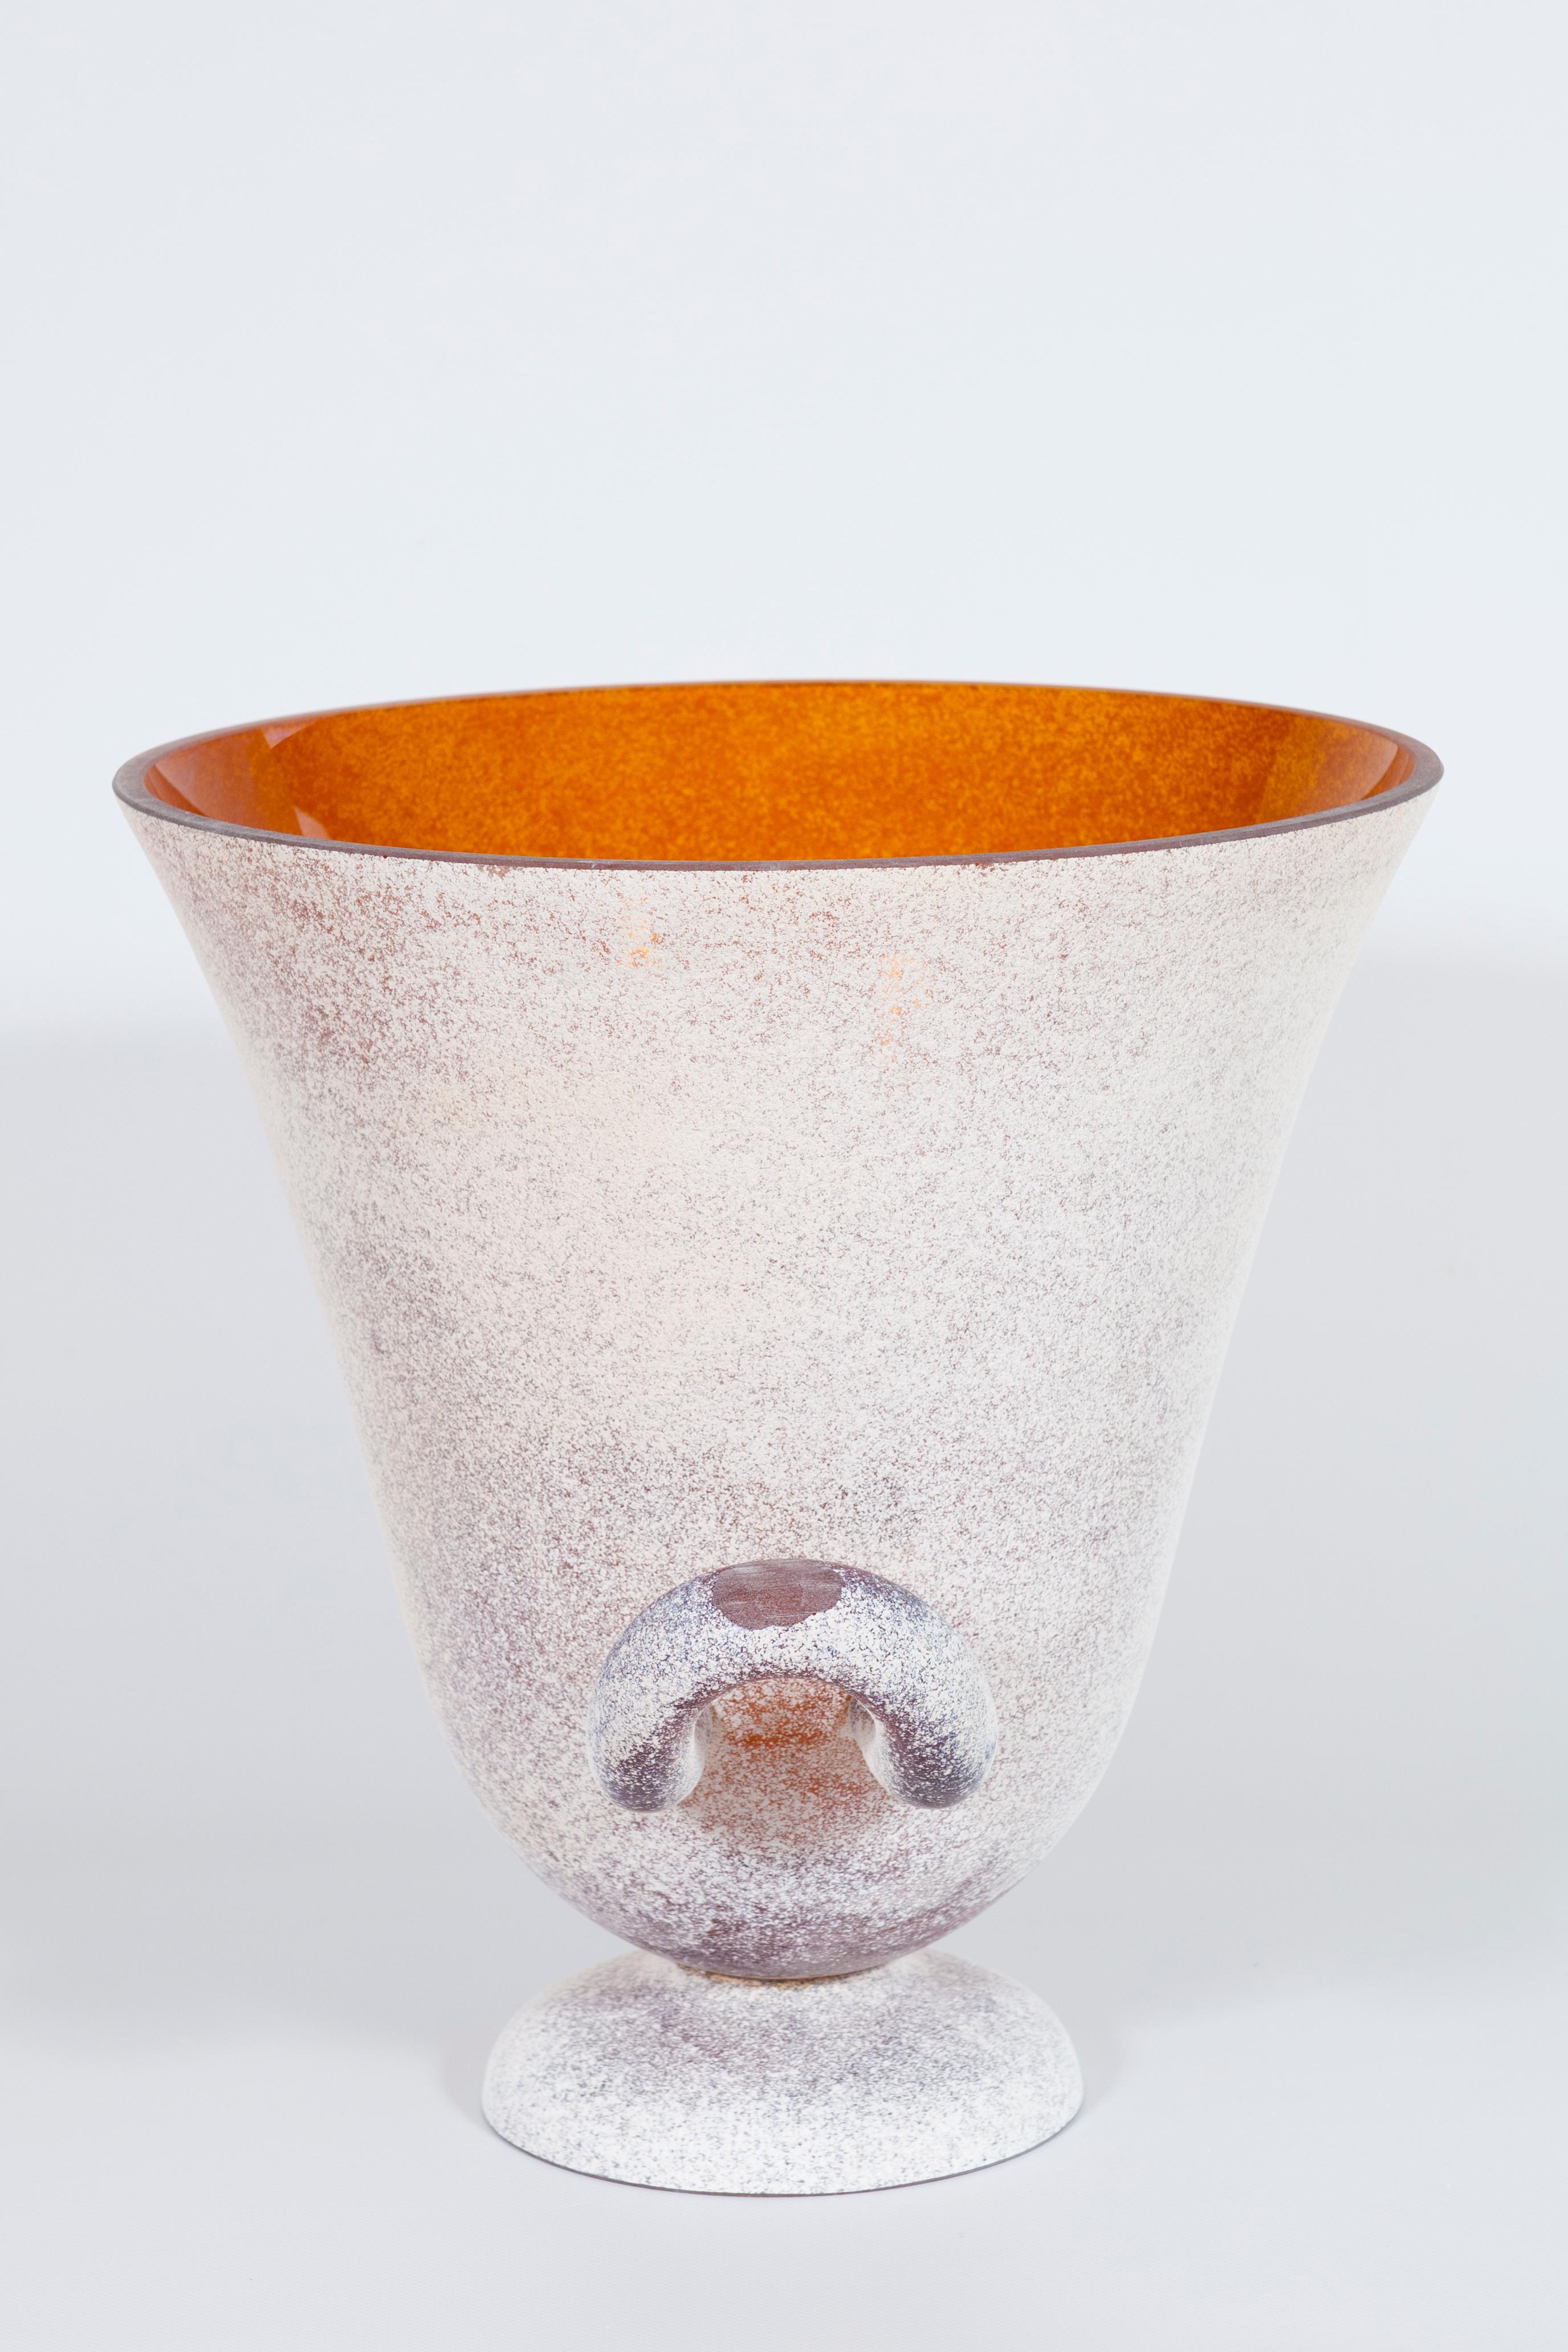 Seguso Scavo Vase in Amber Murano Glass Venice Italy 1970s  For Sale 3